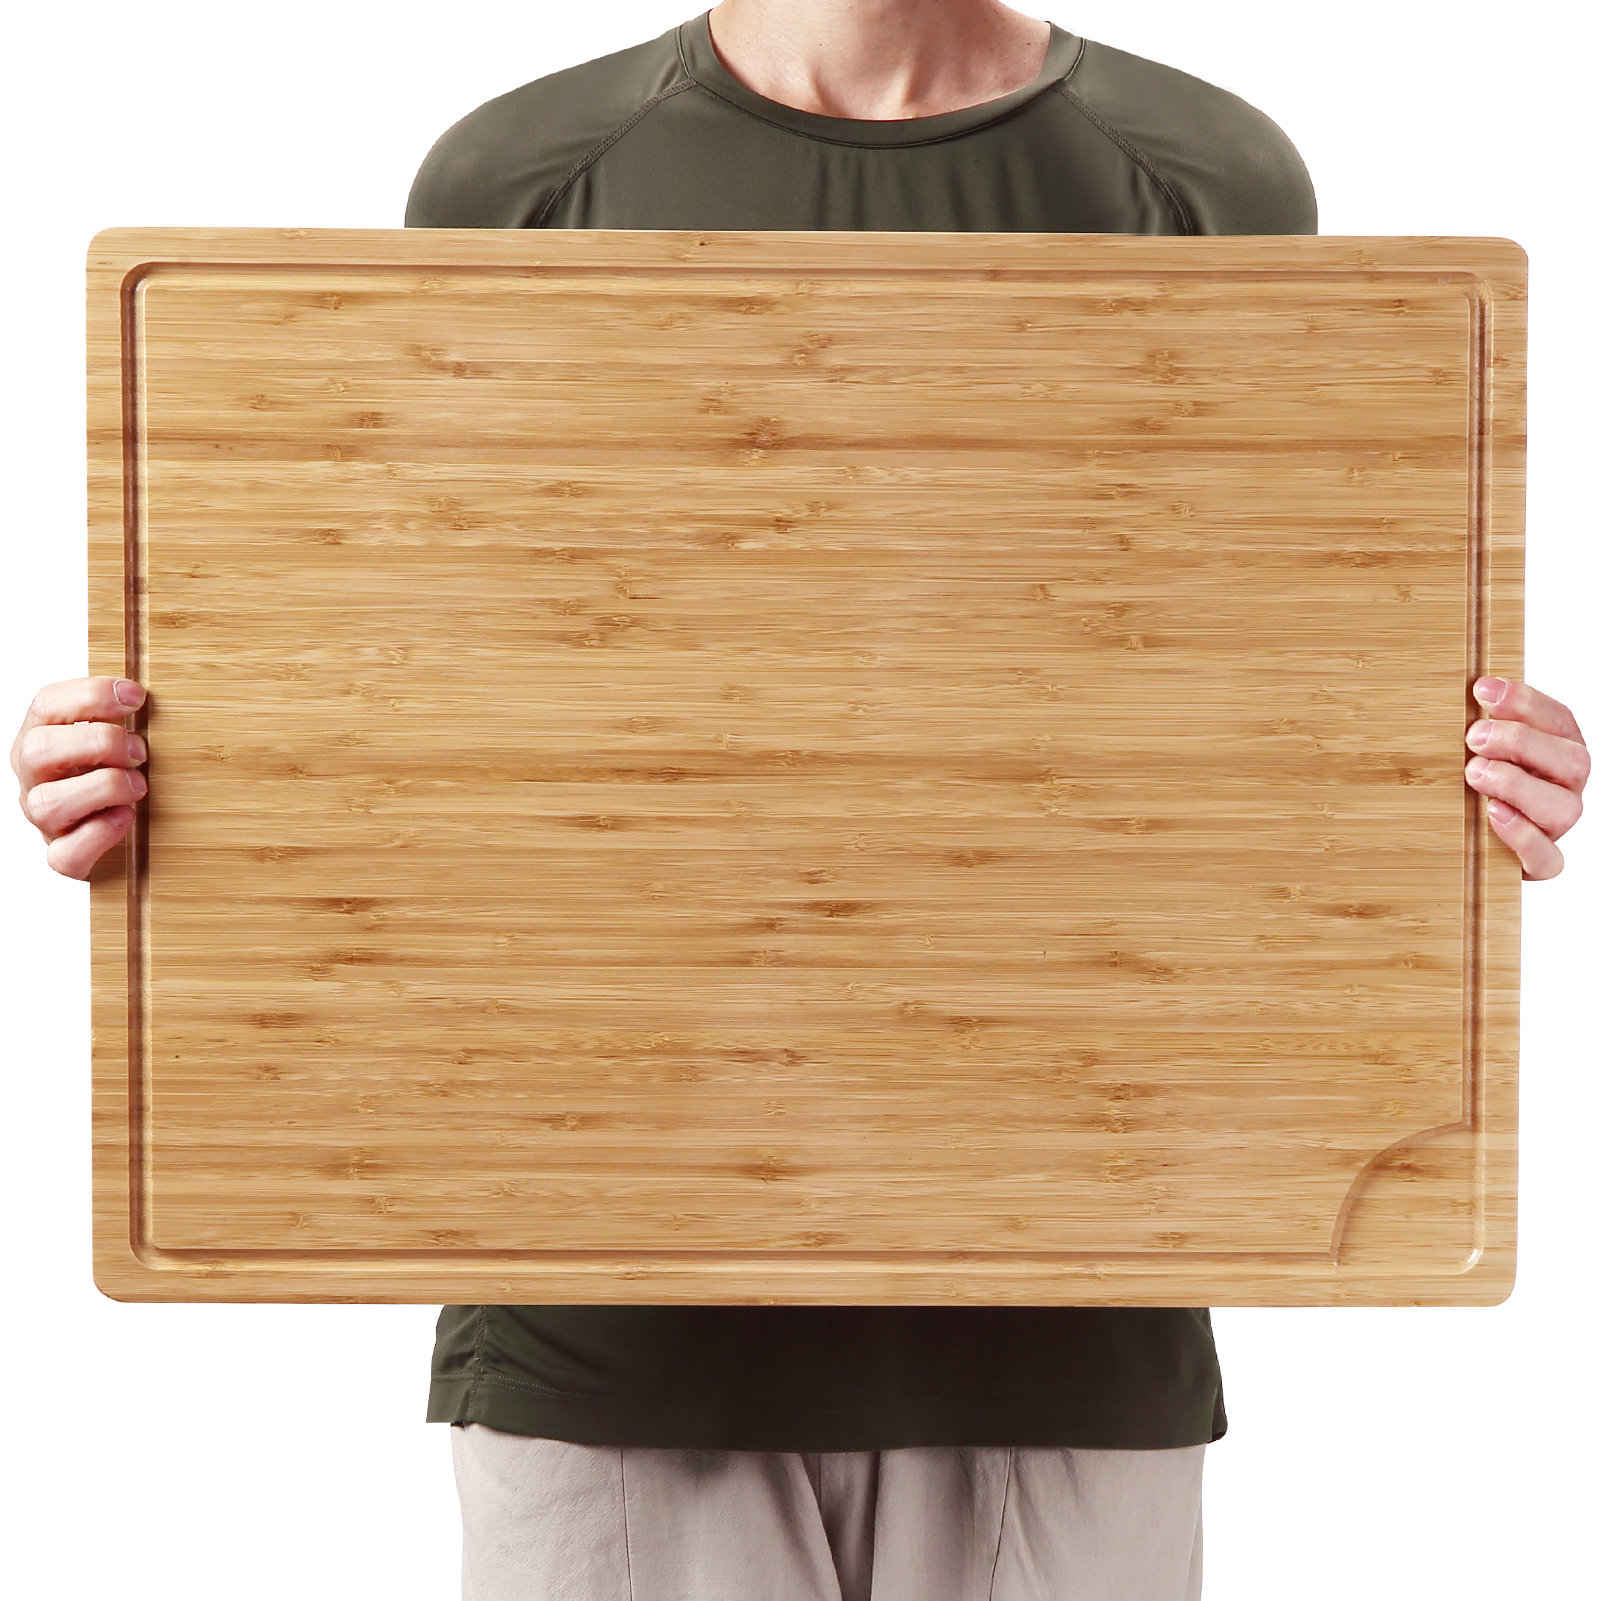 30% OFF! Boos Block Large Maple Wood Cutting Board